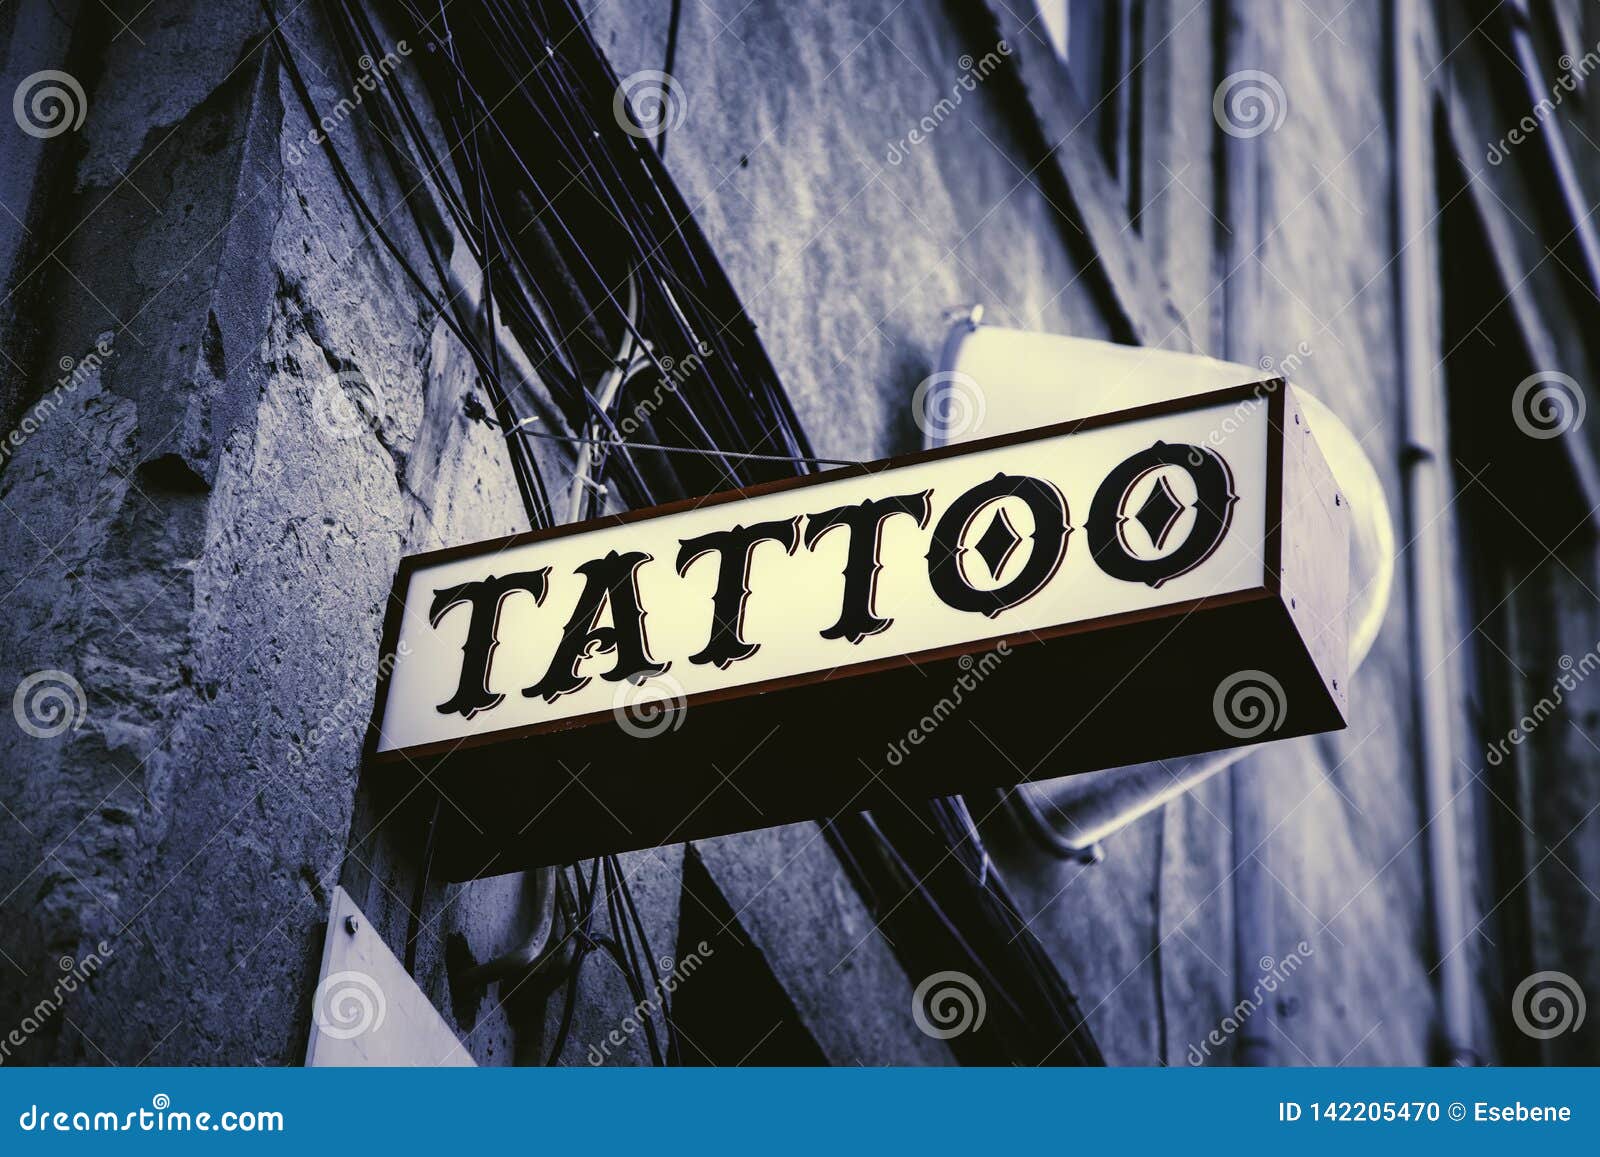 Dripping Tattoo Neon Signs, Dripping Tattoo Led Lights, Sign Decoration,  Tattoo Neon Lights, Custom Neon Sign, Tattoo Shop Led Lights - Etsy